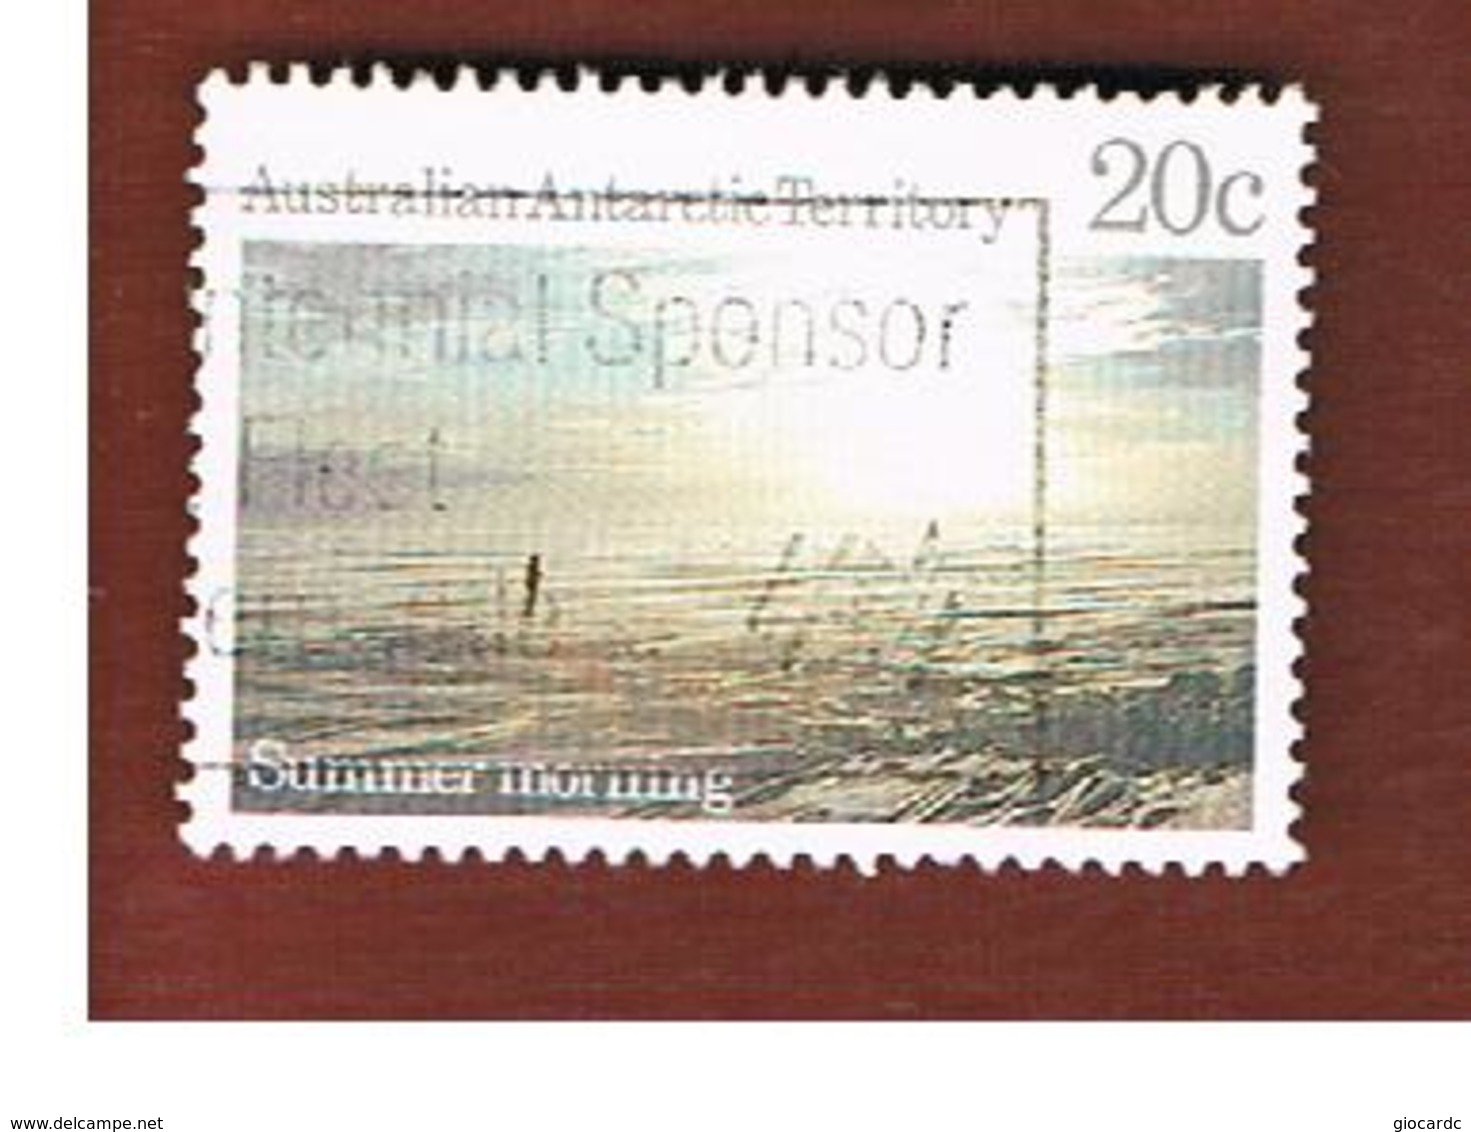 AAT AUSTRALIAN ANTARCTIC TERRITORY - SG 67 - 1984 ANTARCTIC SCENES: SUMMER MORNING  -  USED - Used Stamps